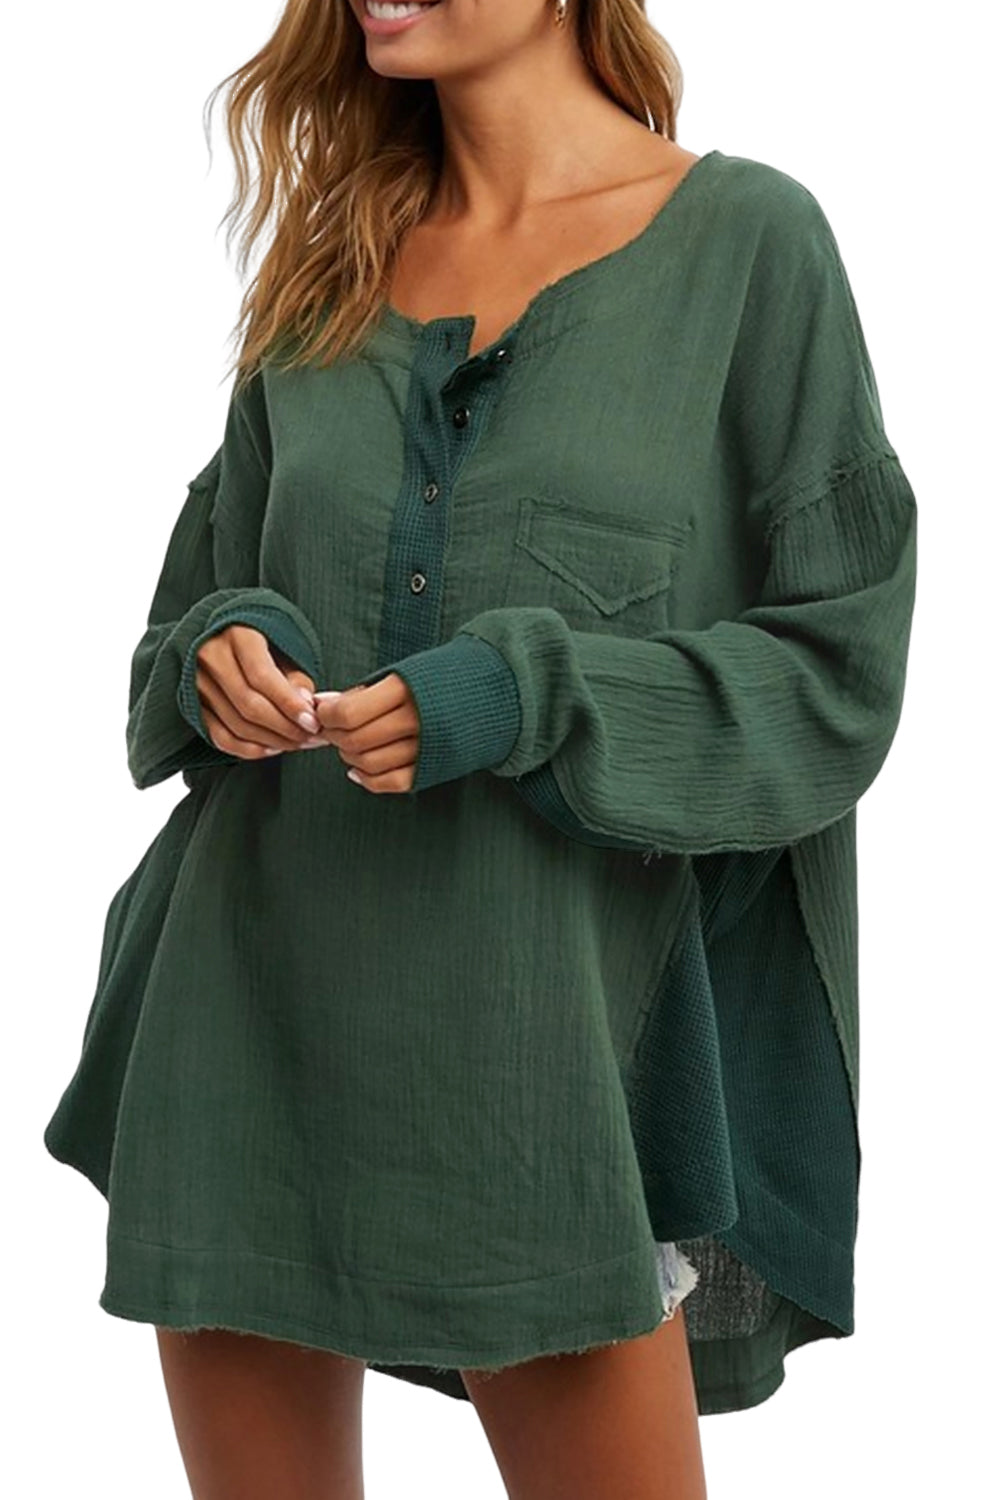 Zelena teksturirana ohlapna bluza z ovratnikom, pleteno v obliki vaflja